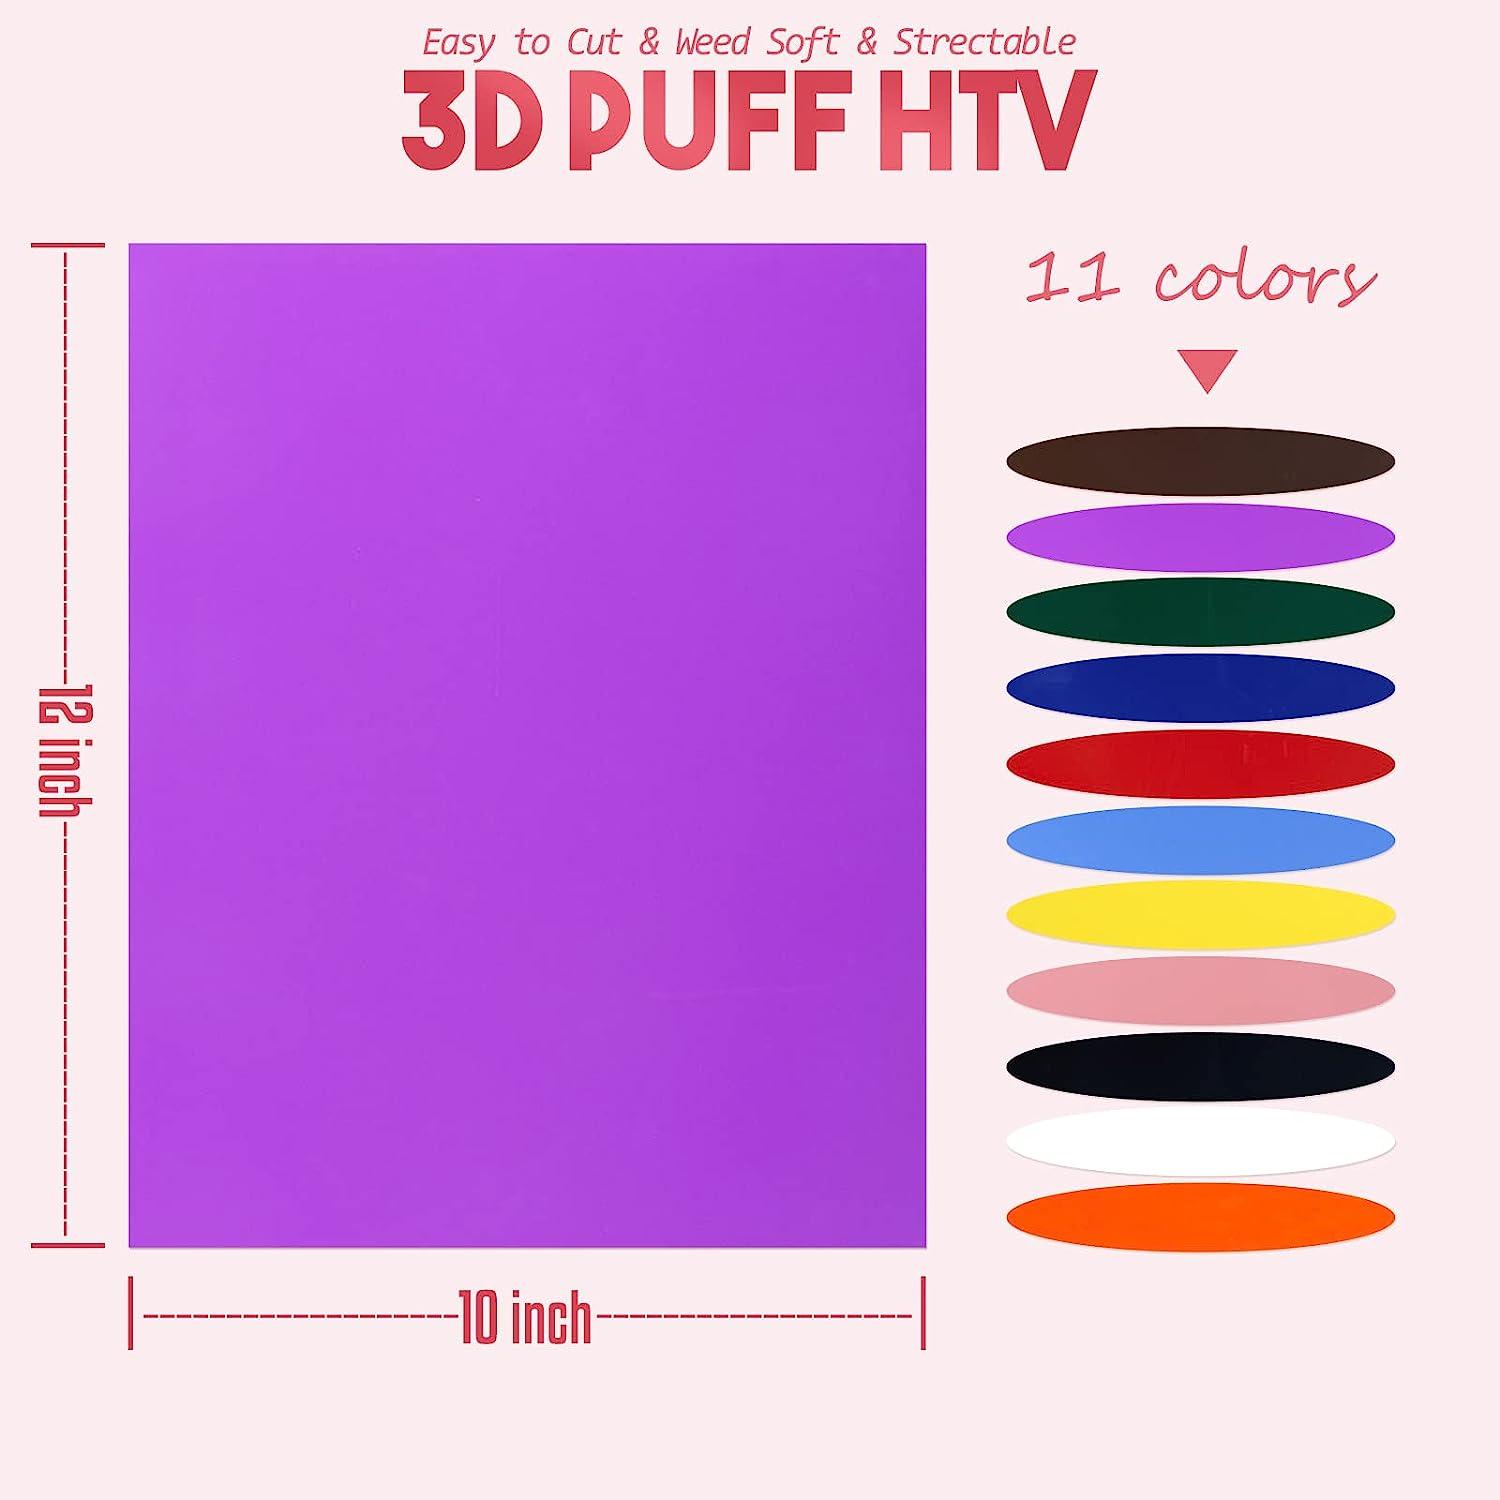 Puff HTV - Purple